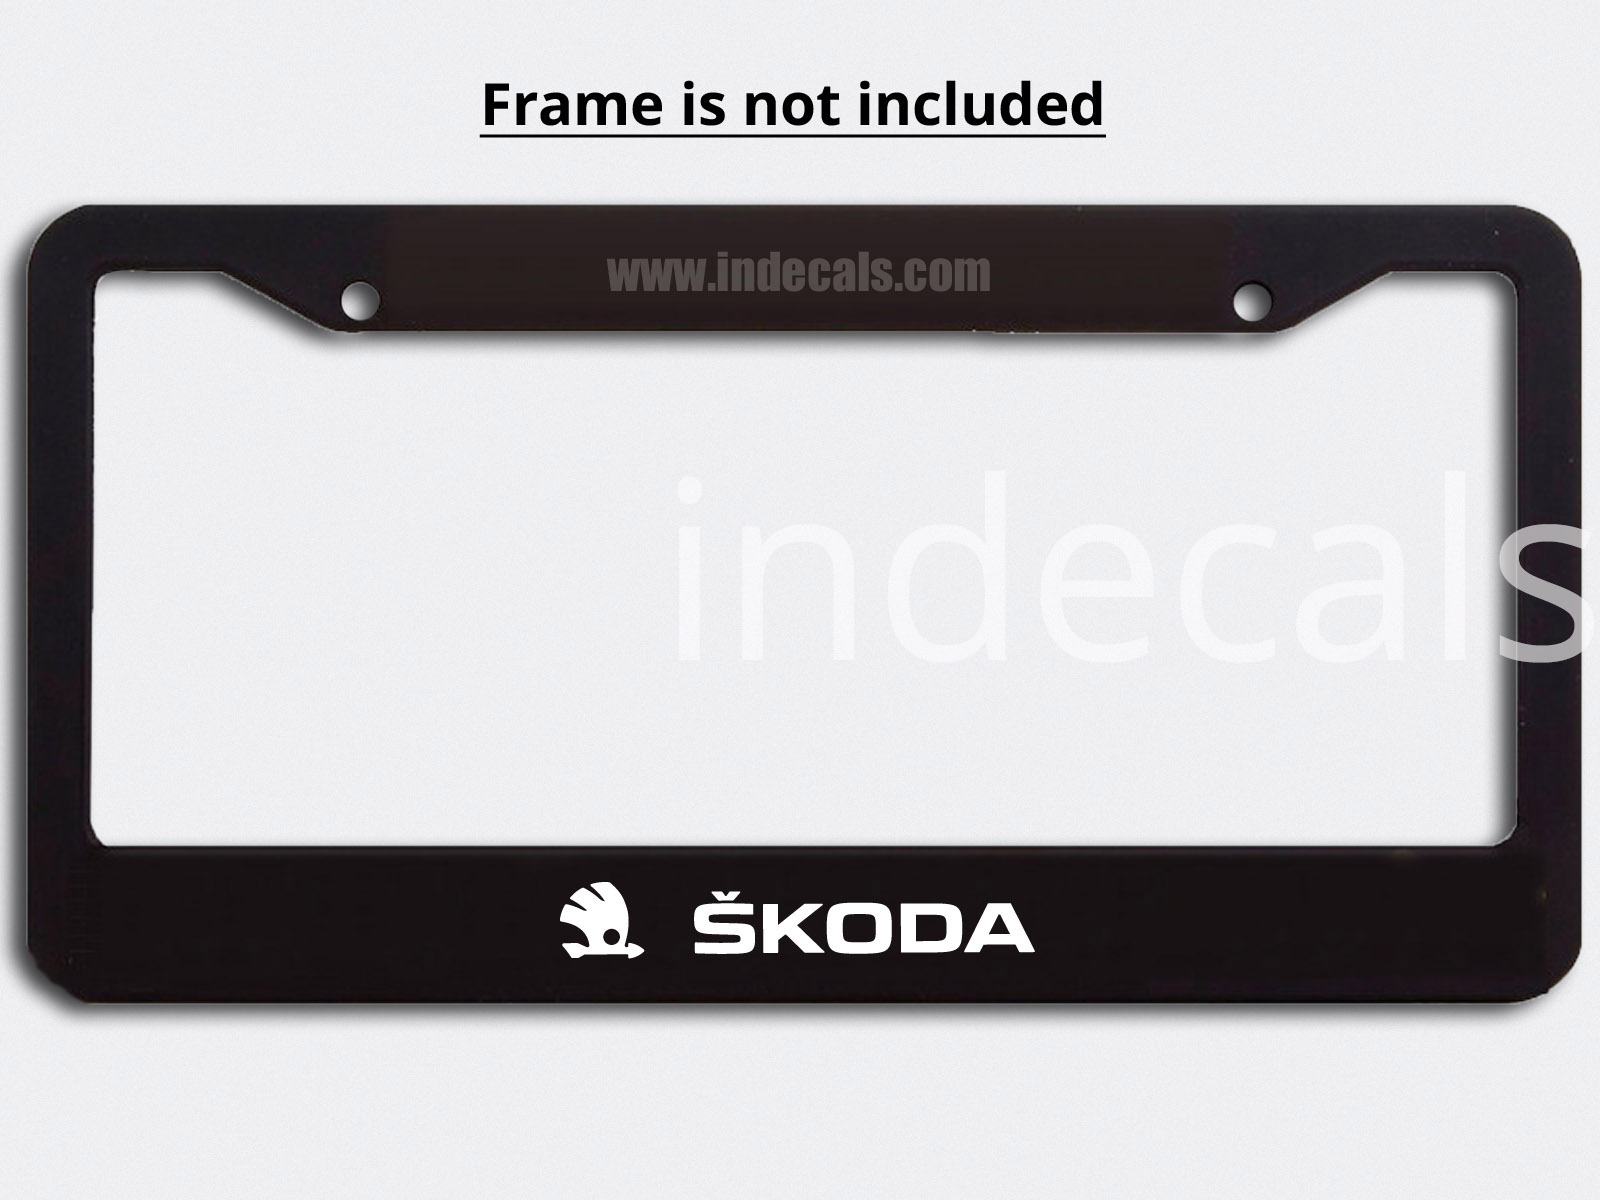 3 x Skoda Stickers for Plate Frame - White